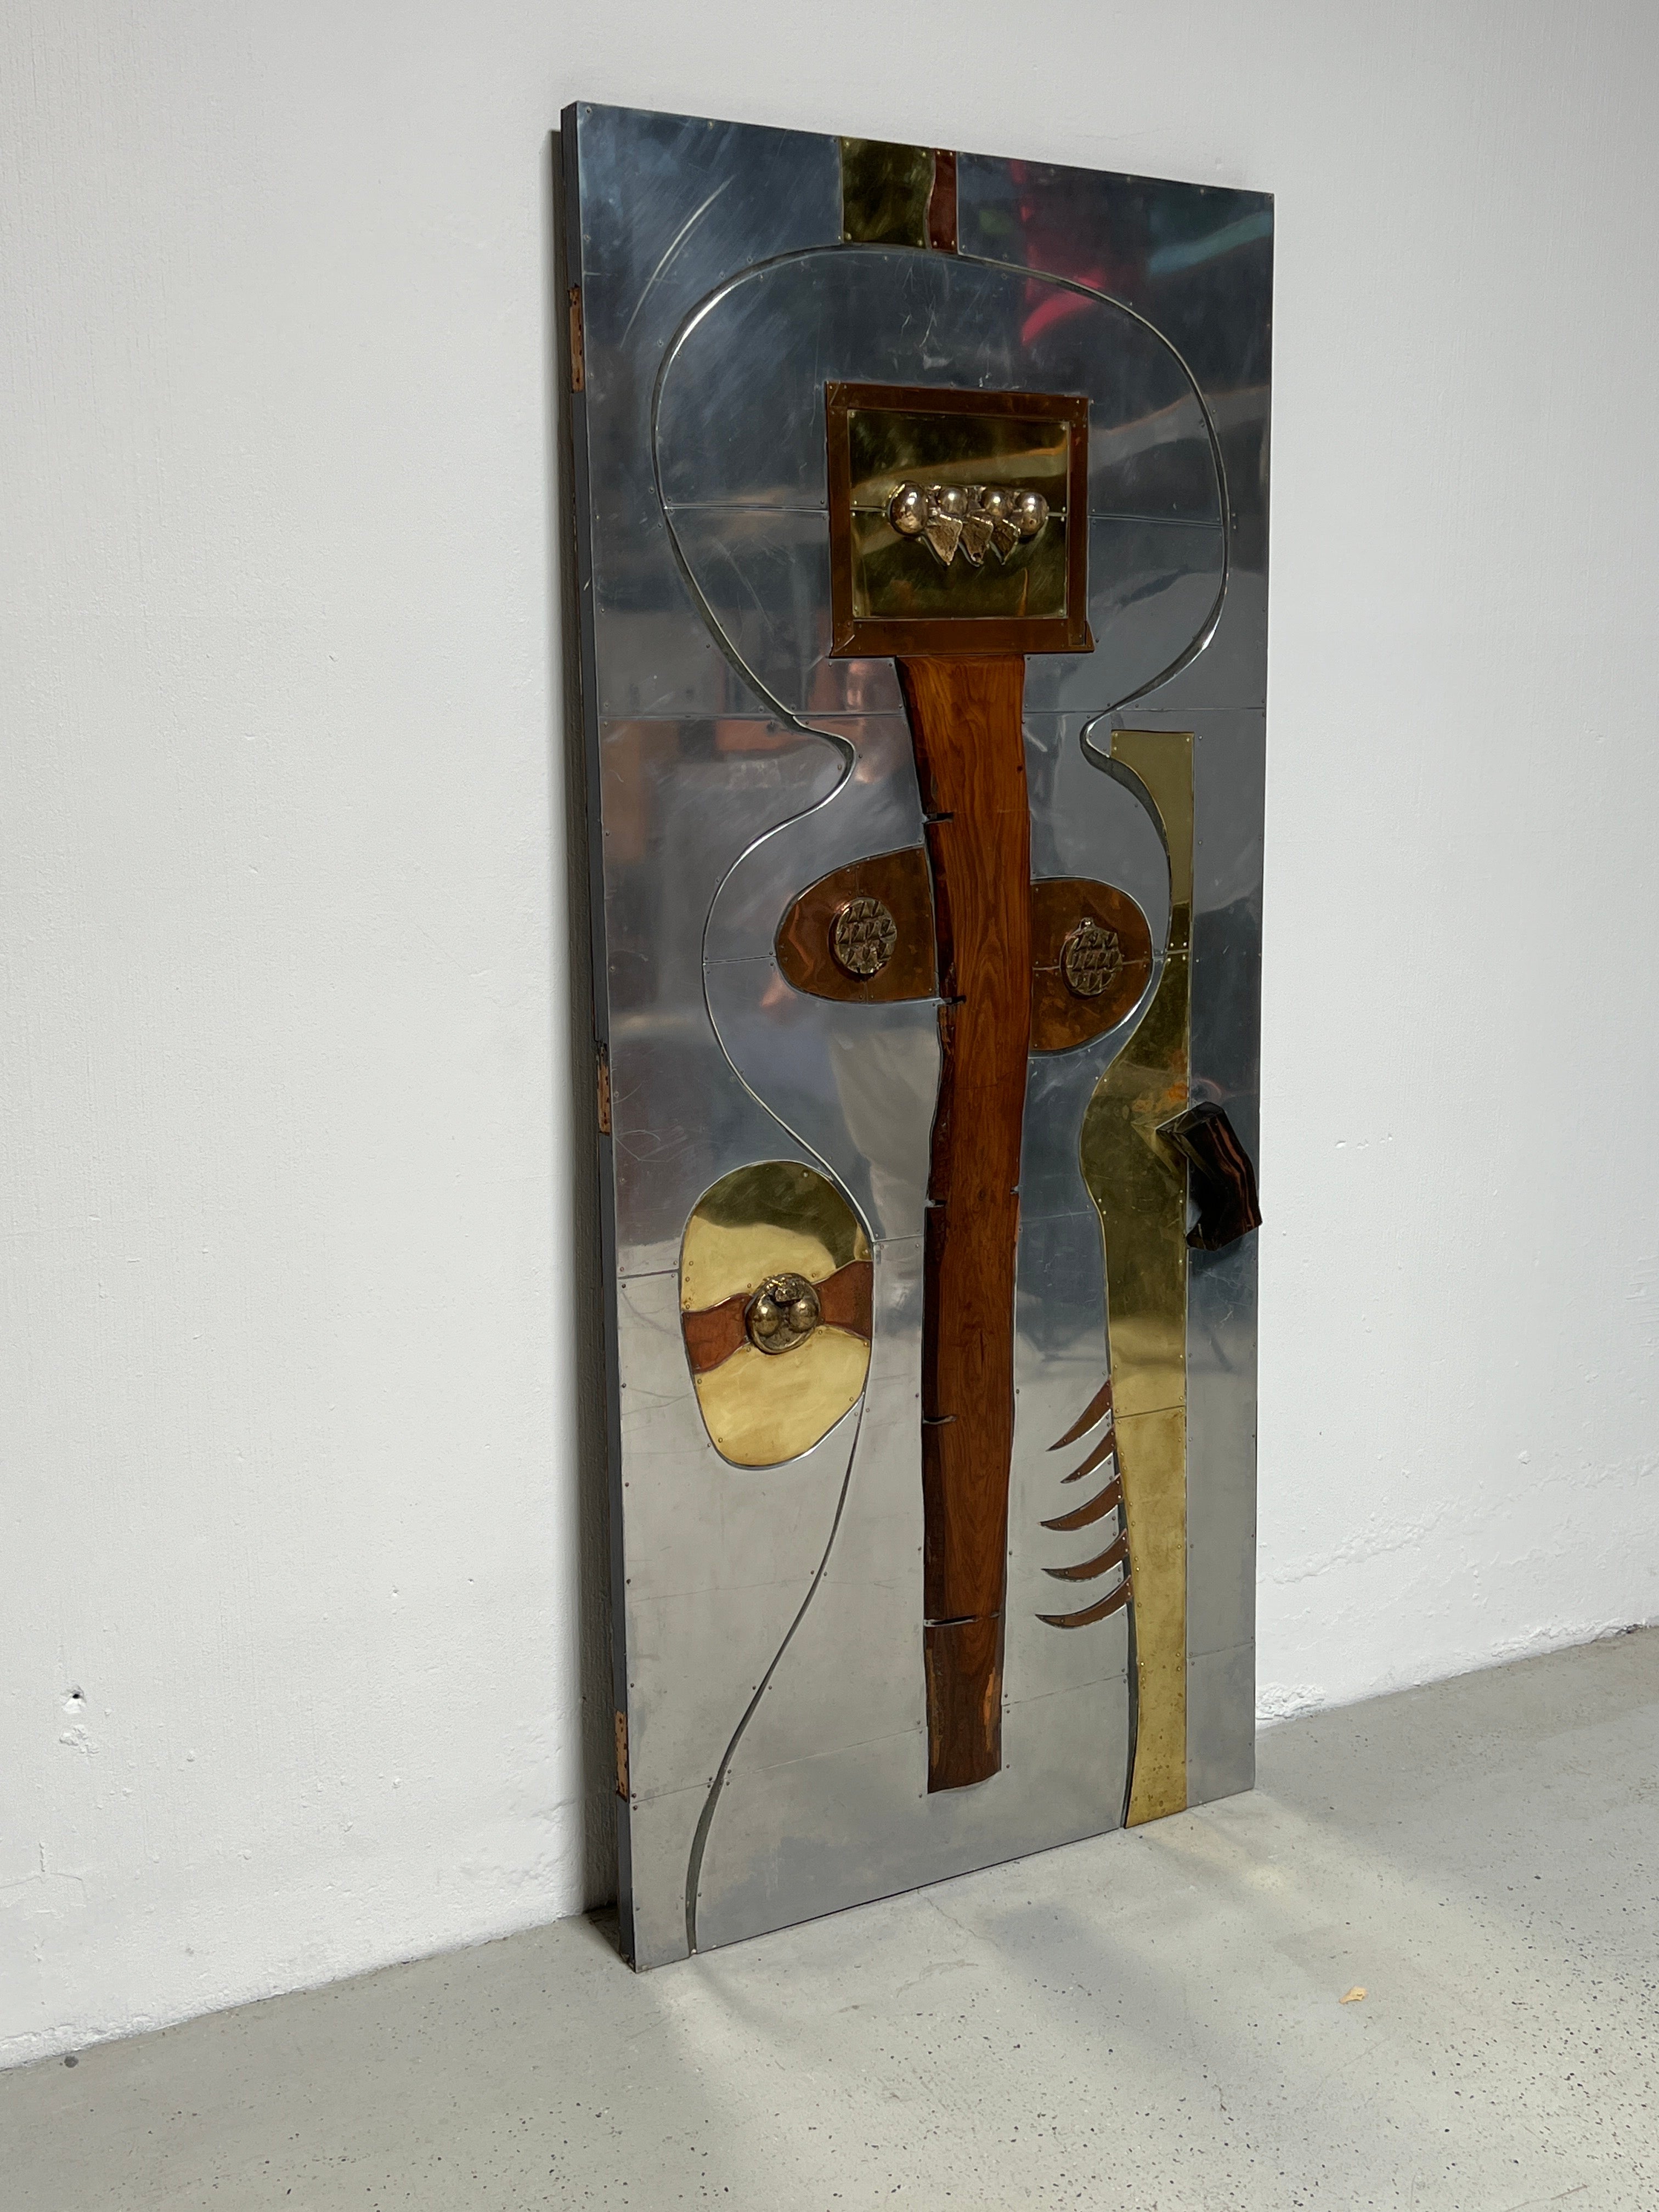 A custom door by artist Thom Weeler titled 